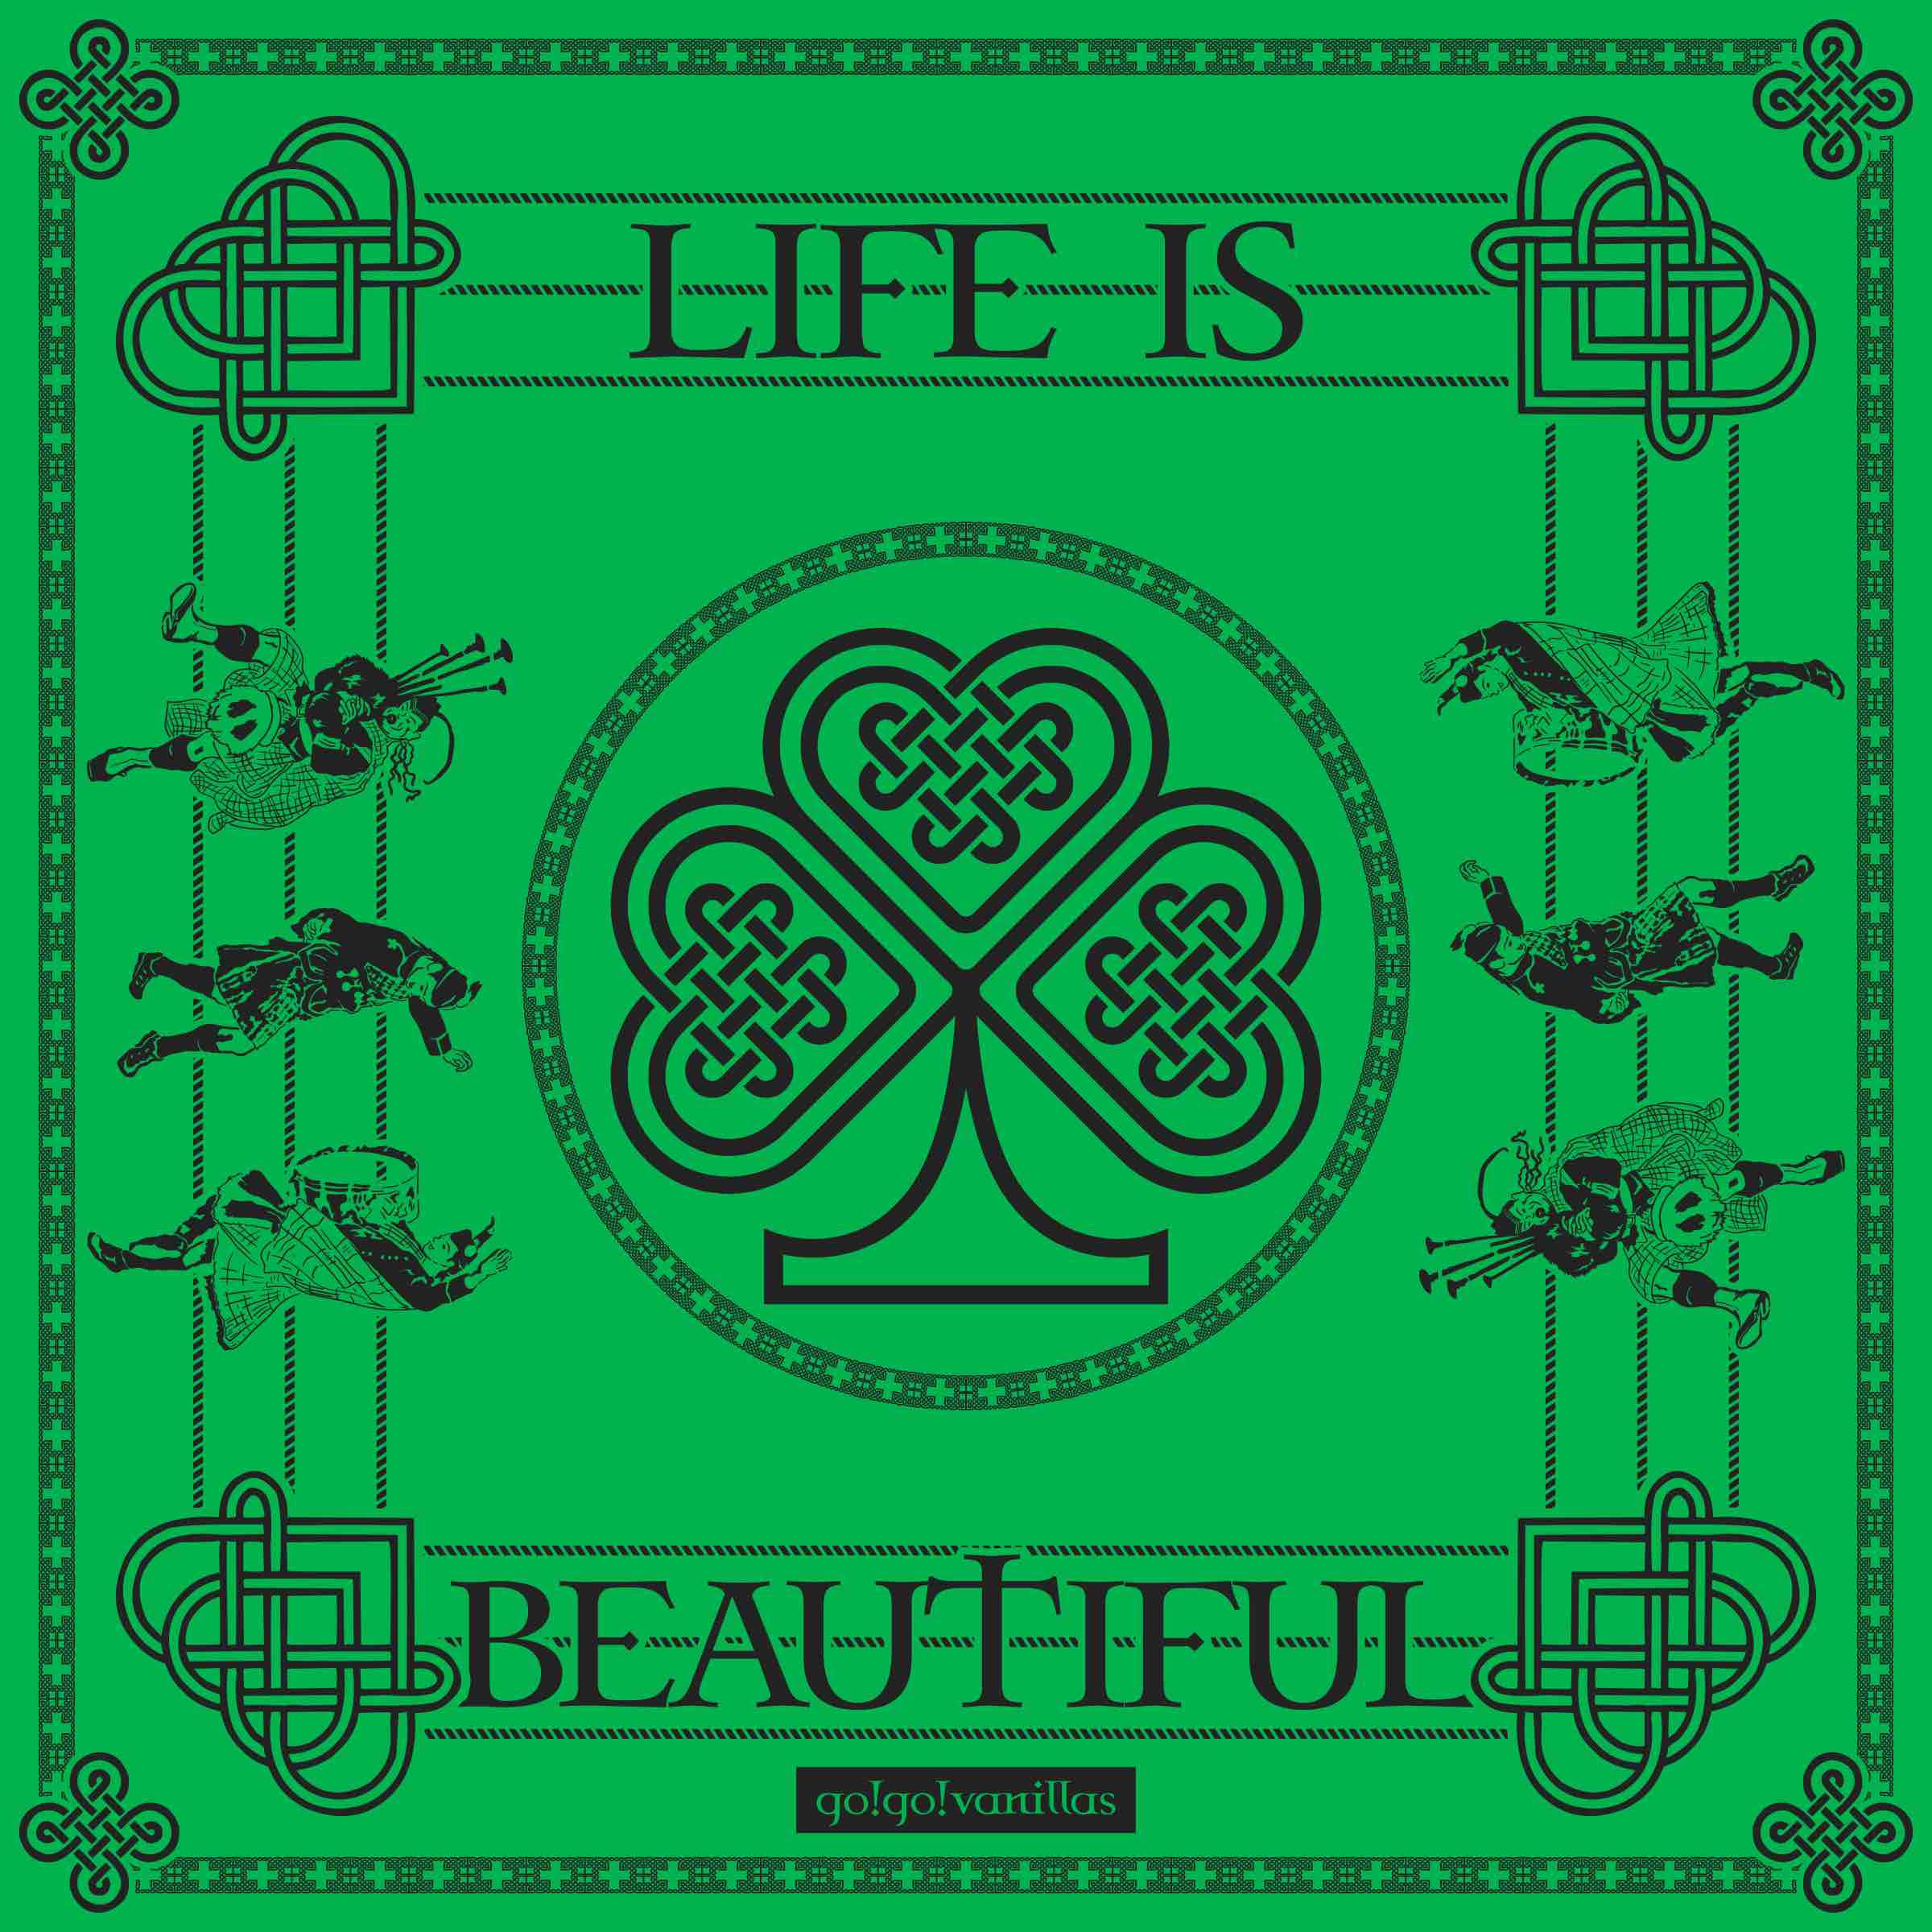 LIFE IS BEAUTIFUL